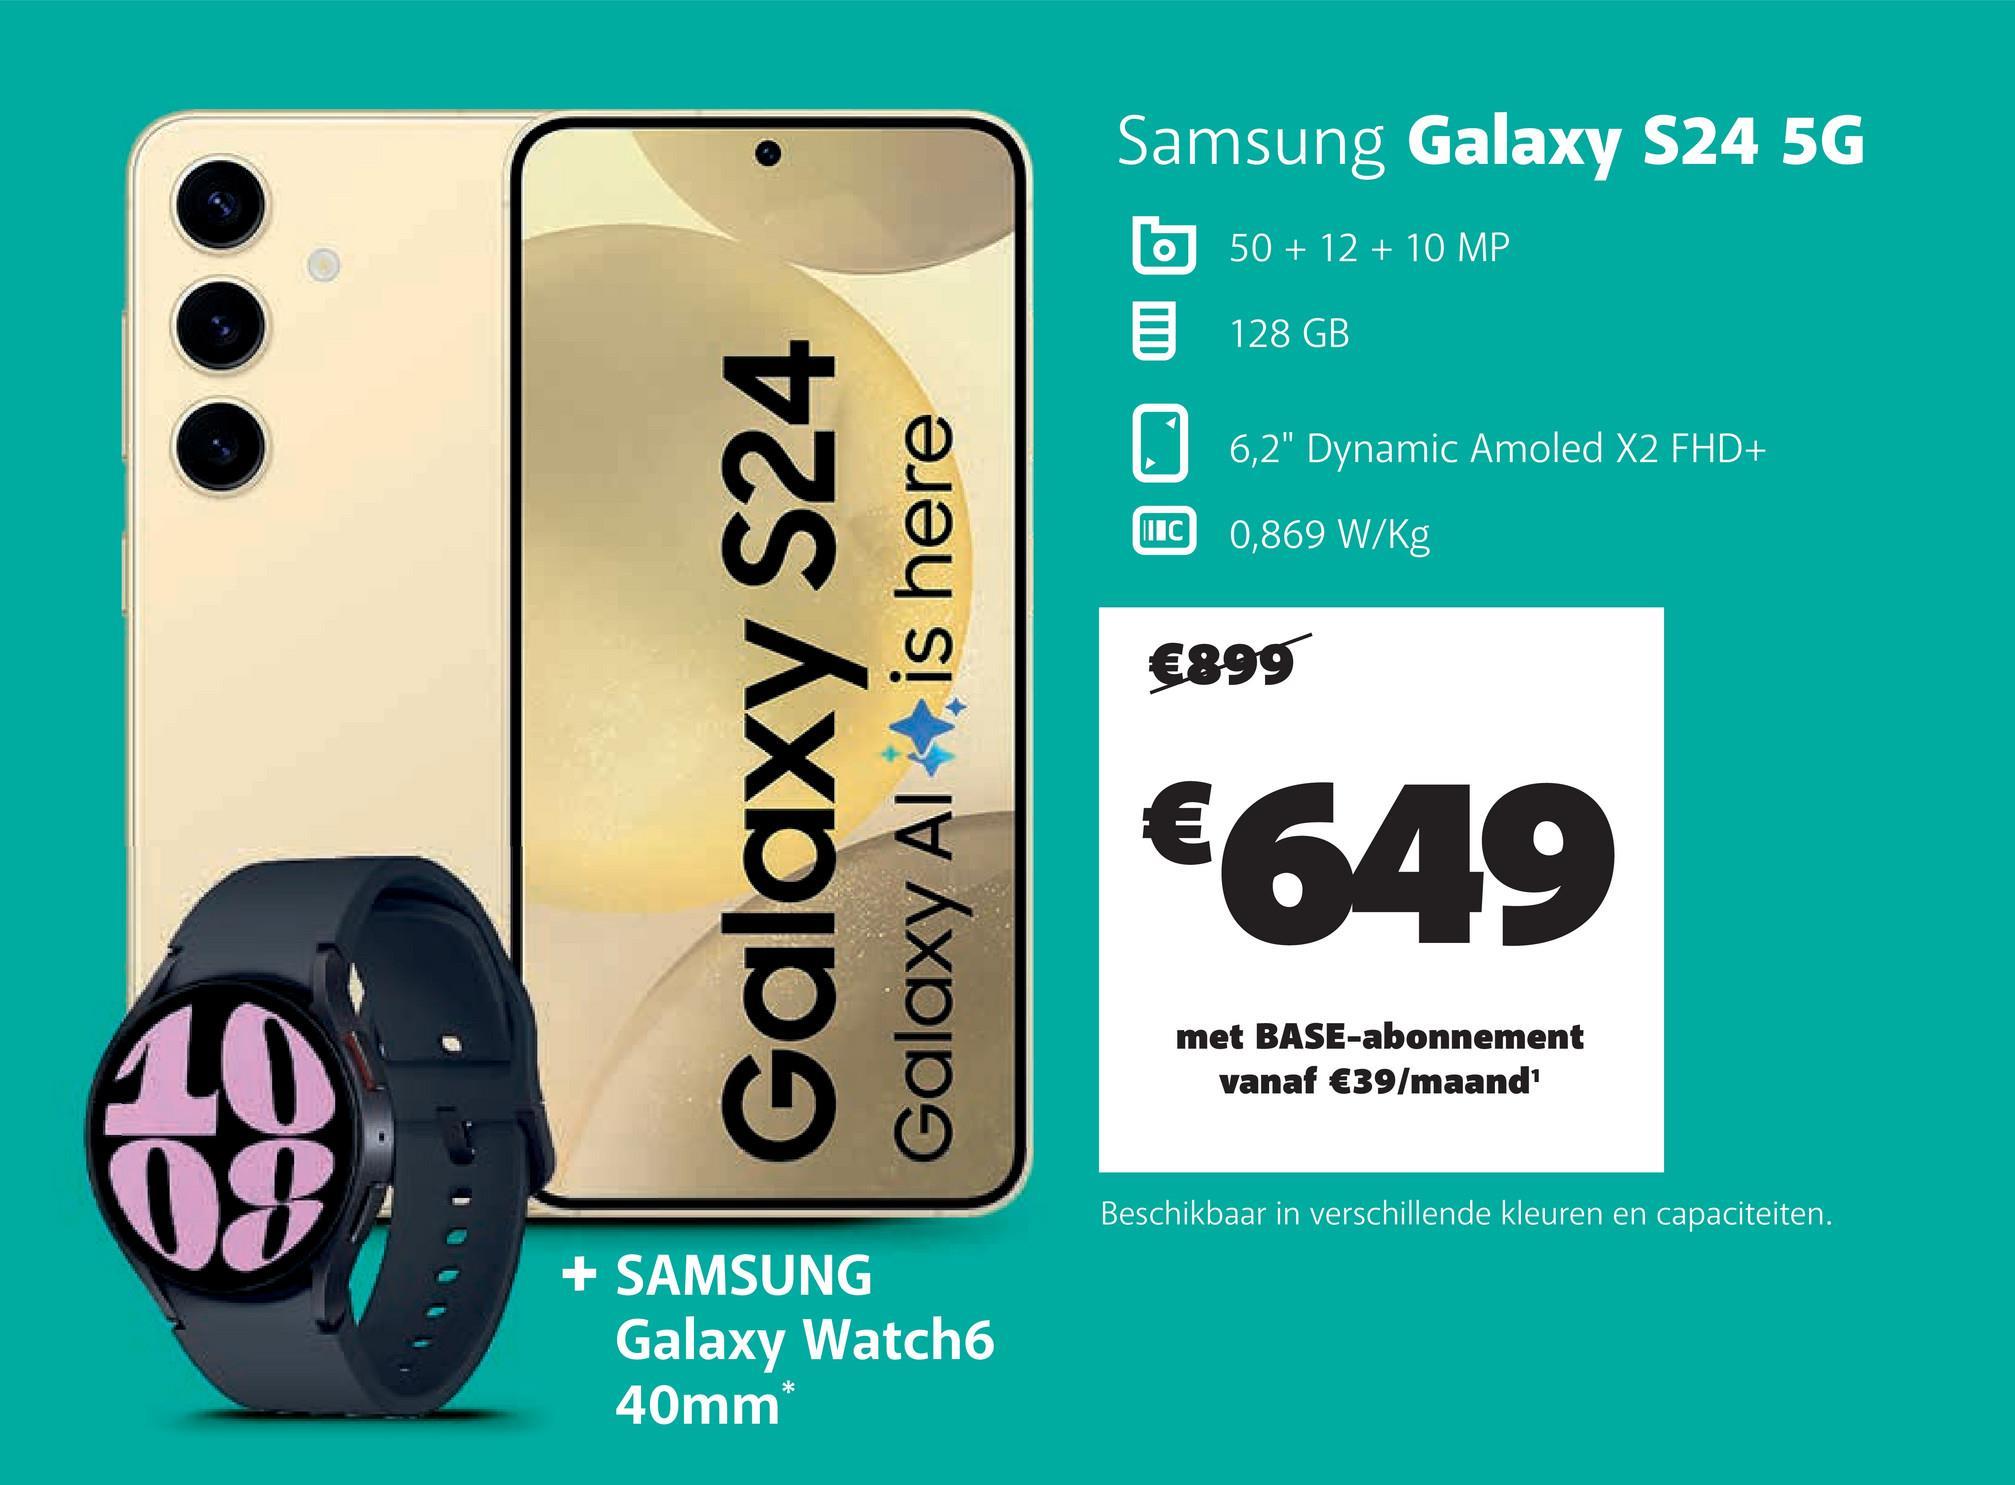 Galaxy S24
Galaxy Al
is here
Samsung Galaxy S24 5G
II C
50+12+10 MP
128 GB
6,2" Dynamic Amoled X2 FHD+
0,869 W/Kg
€899
€649
10
08
+ SAMSUNG
Galaxy Watch6
40mm*
met BASE-abonnement
vanaf €39/maand¹
Beschikbaar in verschillende kleuren en capaciteiten.